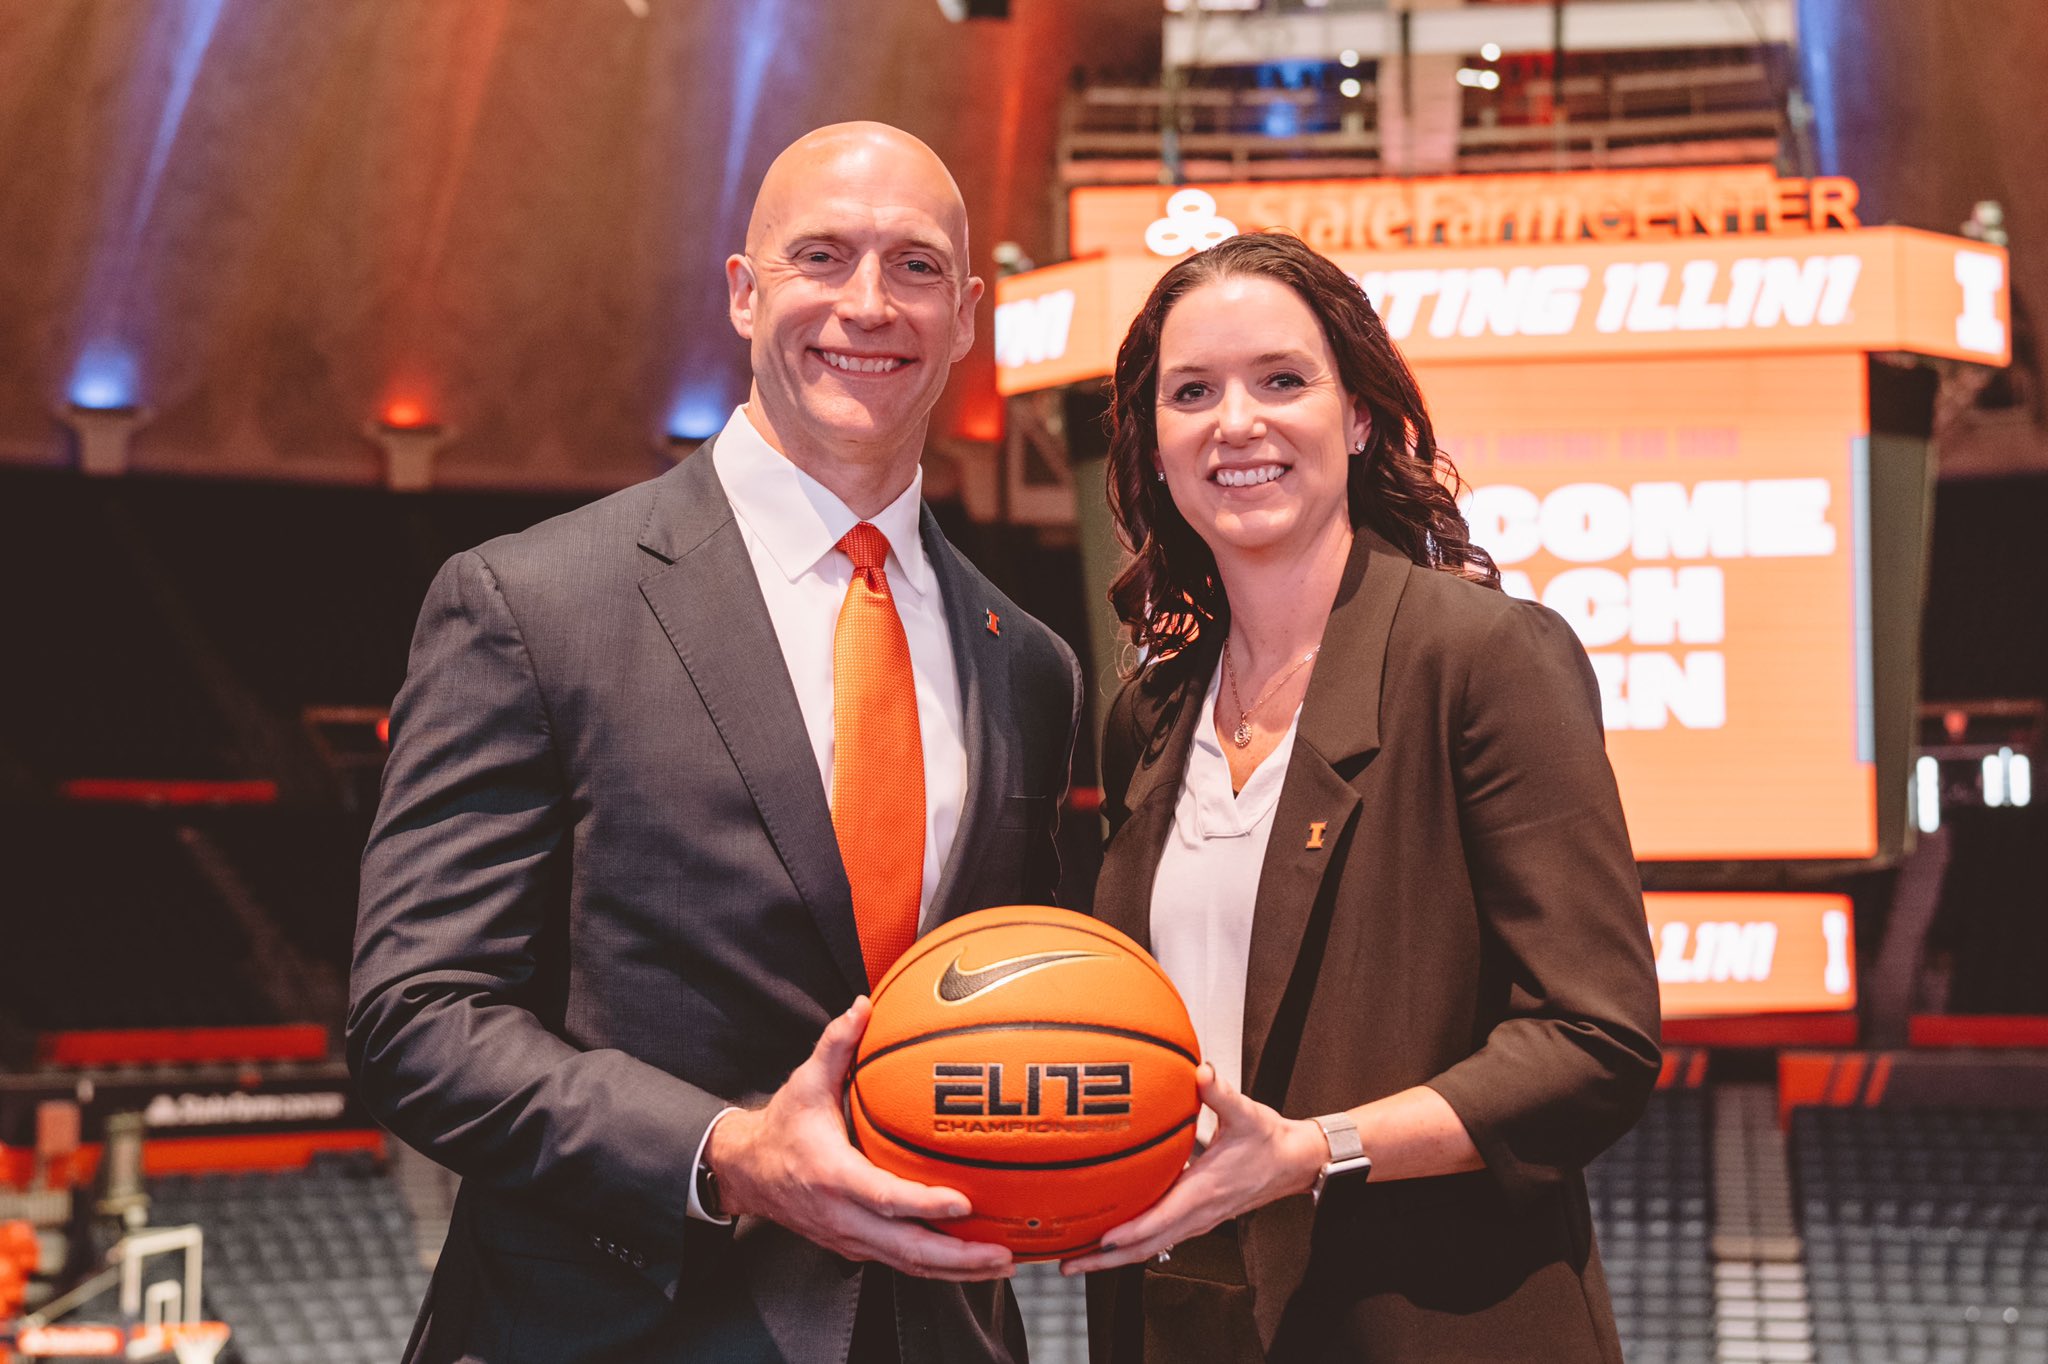 Shauna Green Introduced as New Illini Women's Basketball Coach